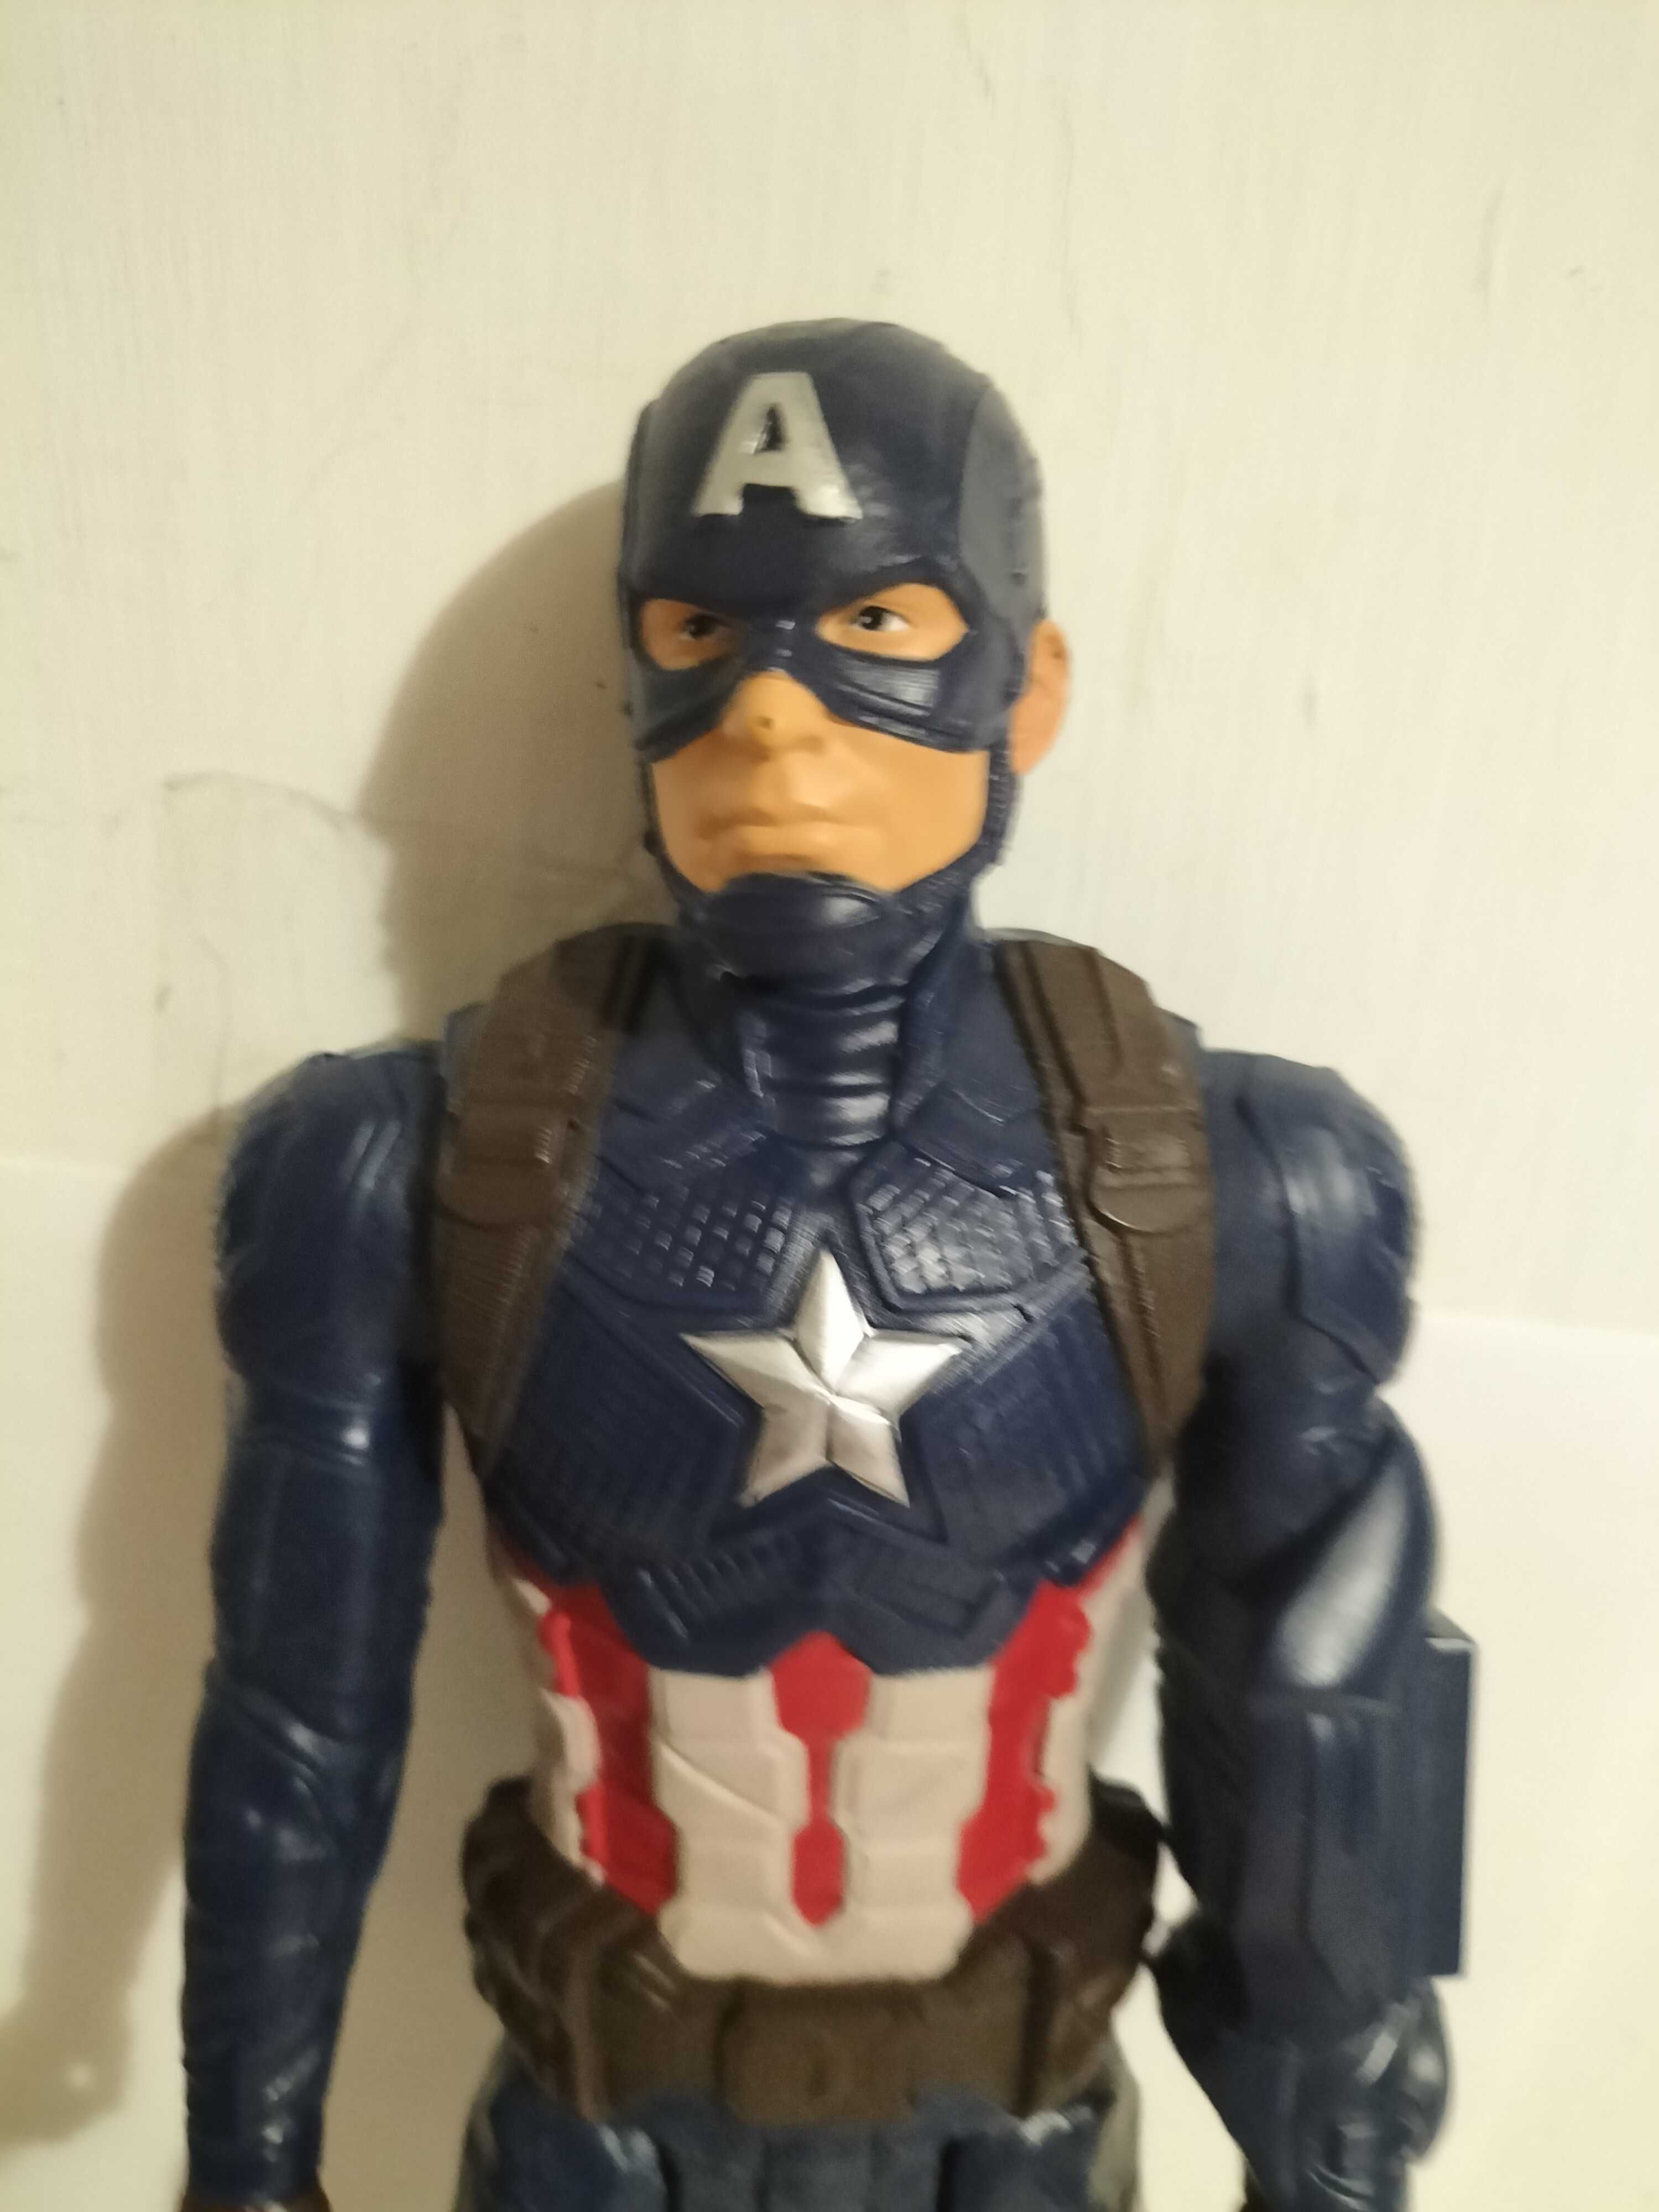 Kapitan Ameryka figurka avengers 30 cm. Hasbro